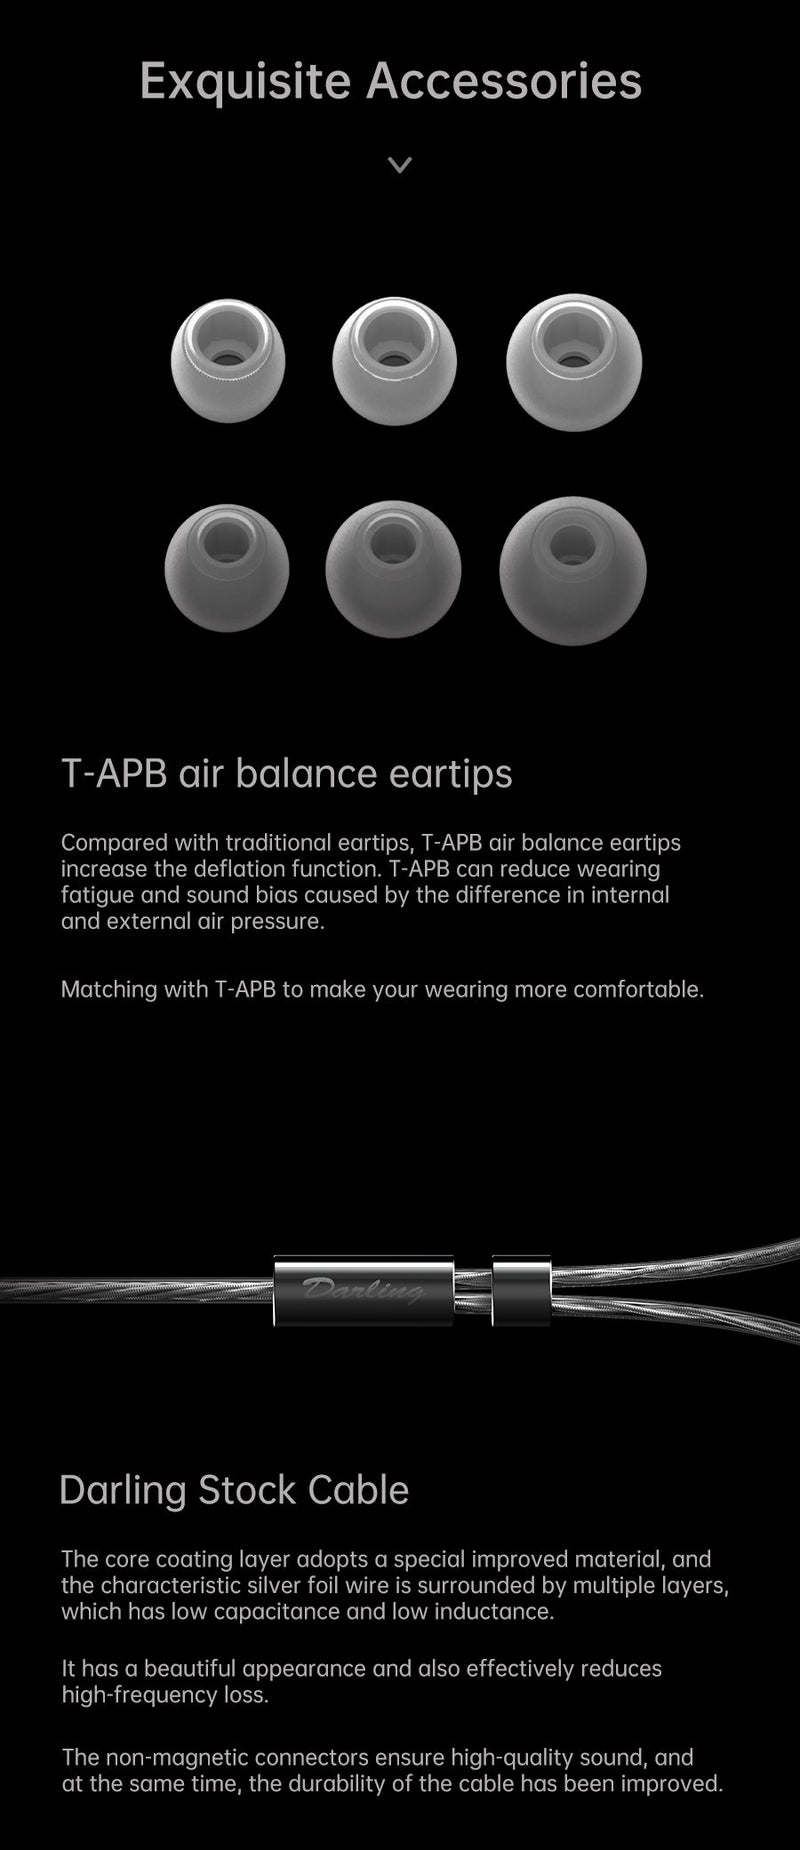 Apos Audio Tanchjim Earphone / In-Ear Monitor (IEM) Tanchjim Darling Hybrid IEM